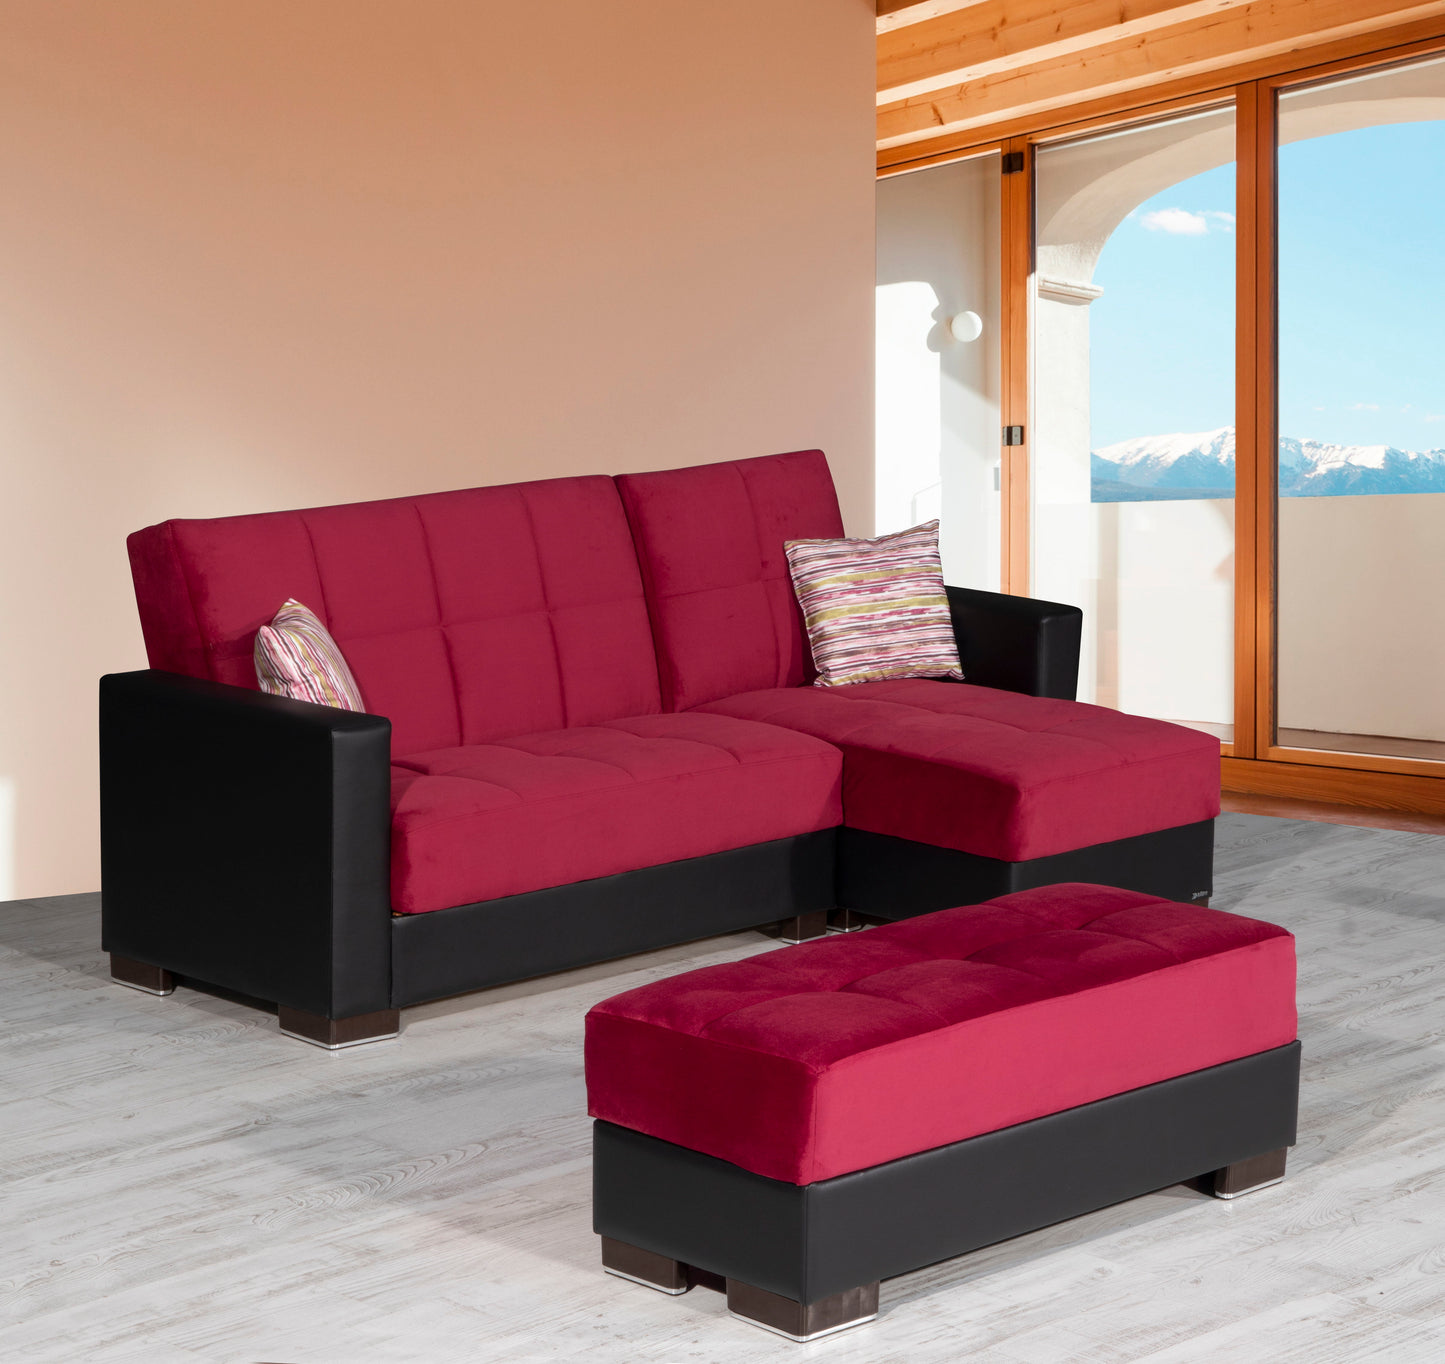 Ottomanson Armada - Chaise Lounge With Storage